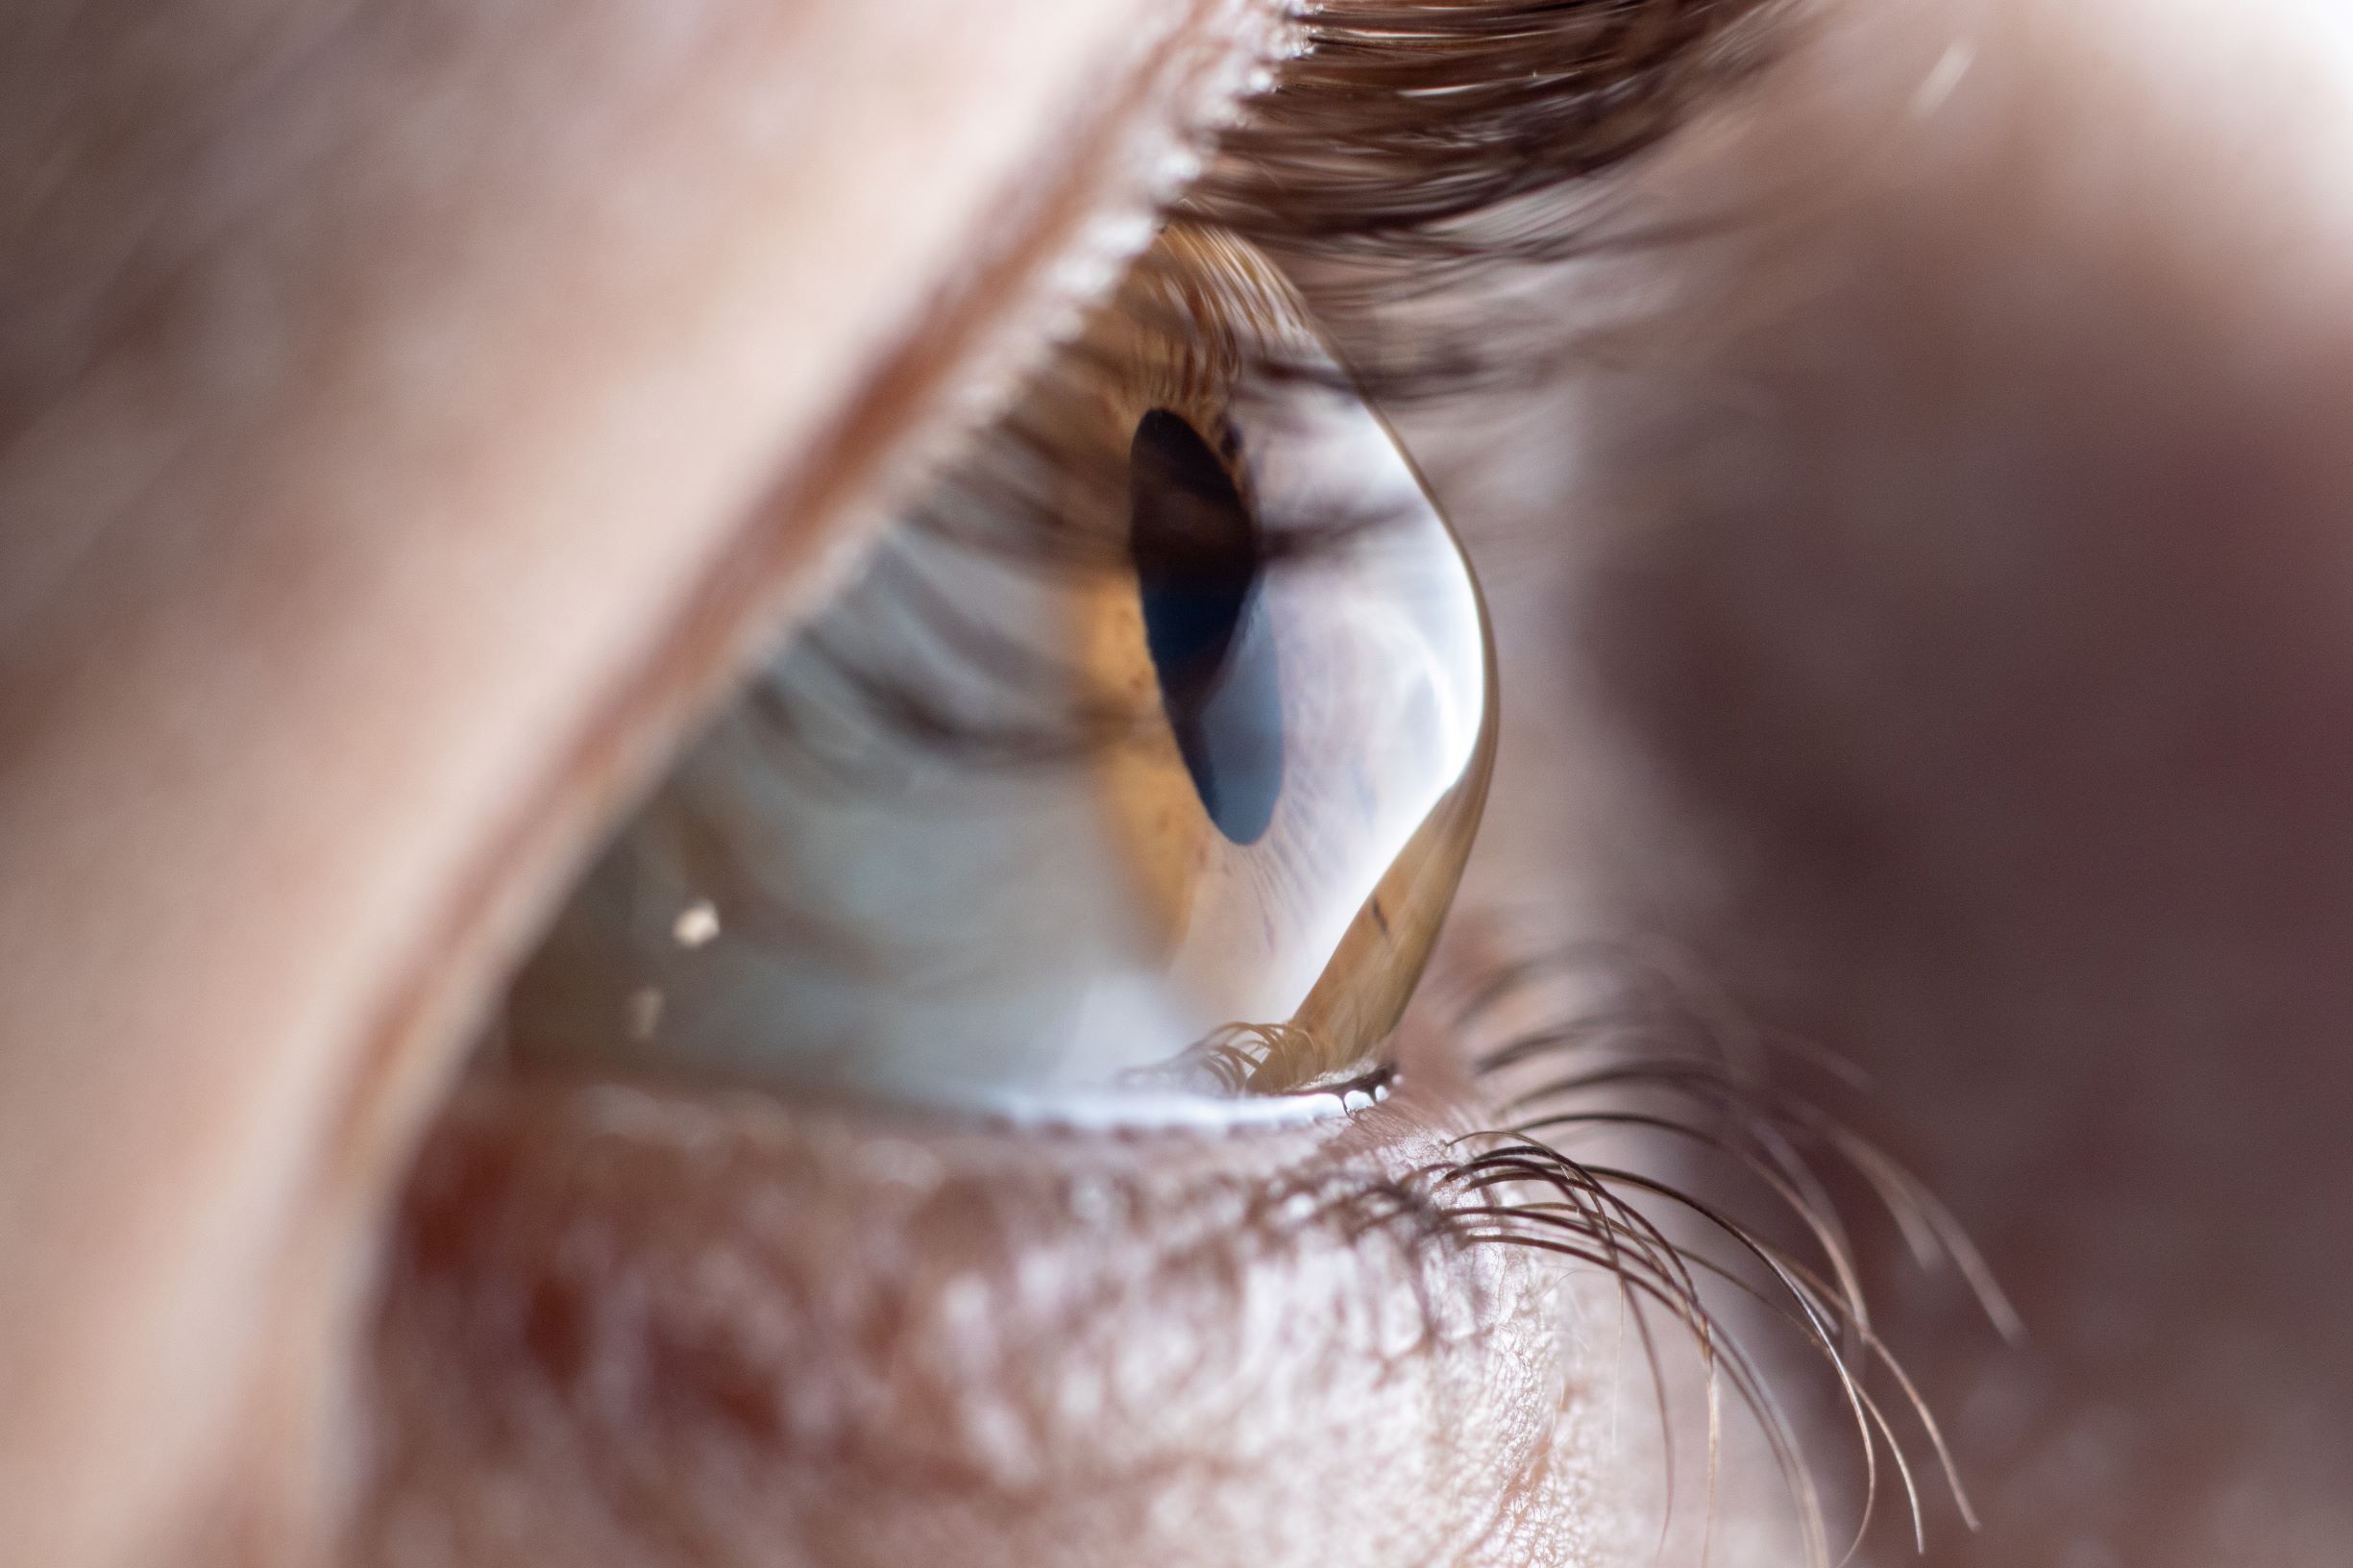 A person with keratconus, a disease of the cornea